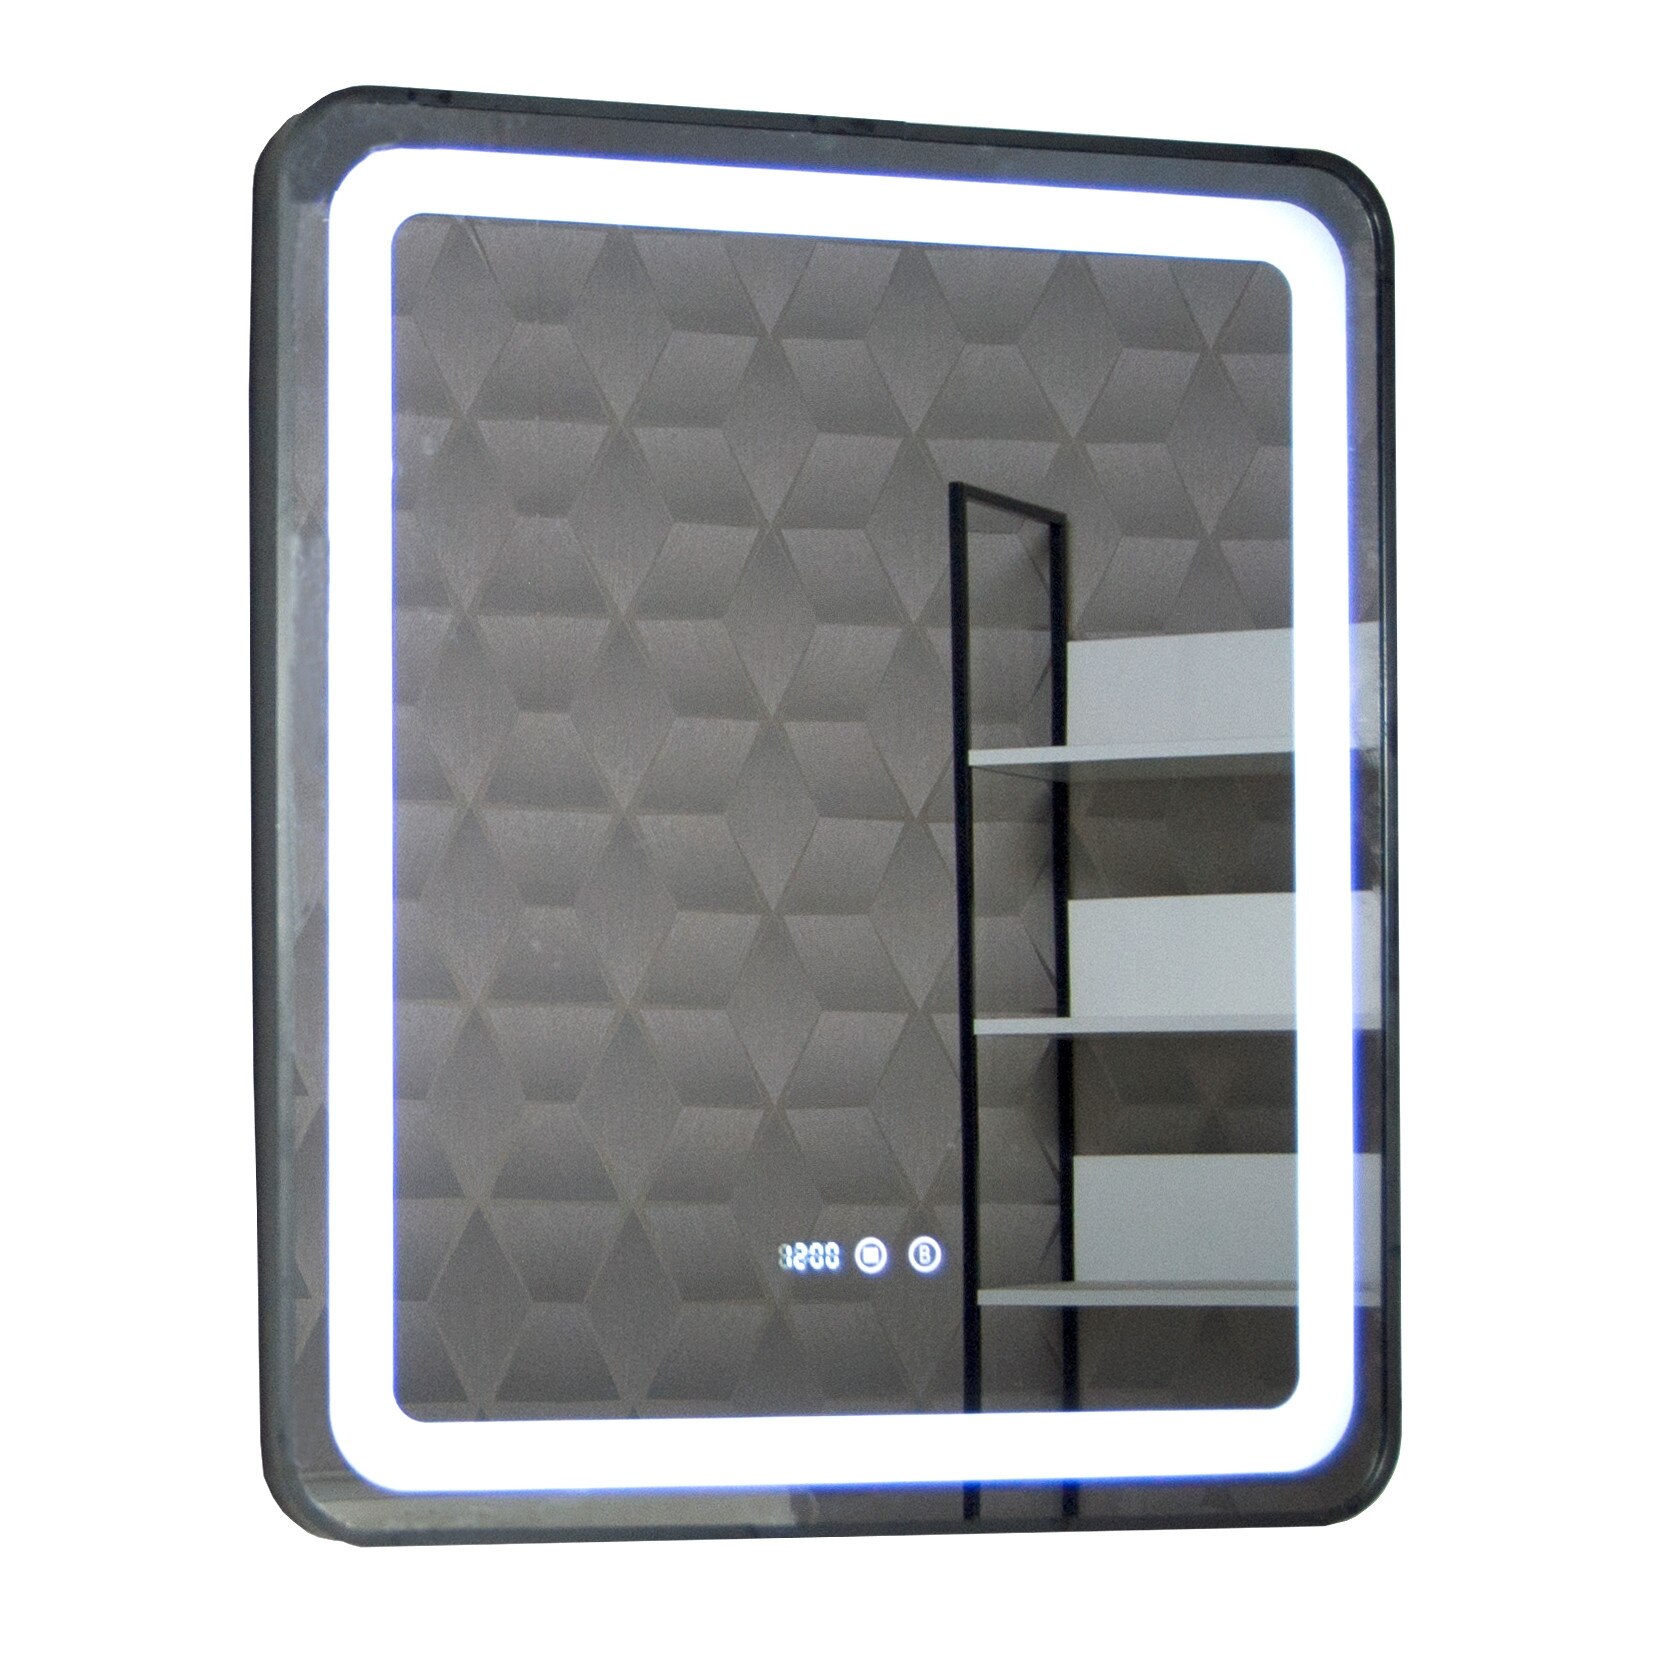 Fotografie Oglinda baie cu iluminare LED Badenmob, functie dezaburire, ceas, data si termometru, 70x80cm, rama neagra, clasa energetica G